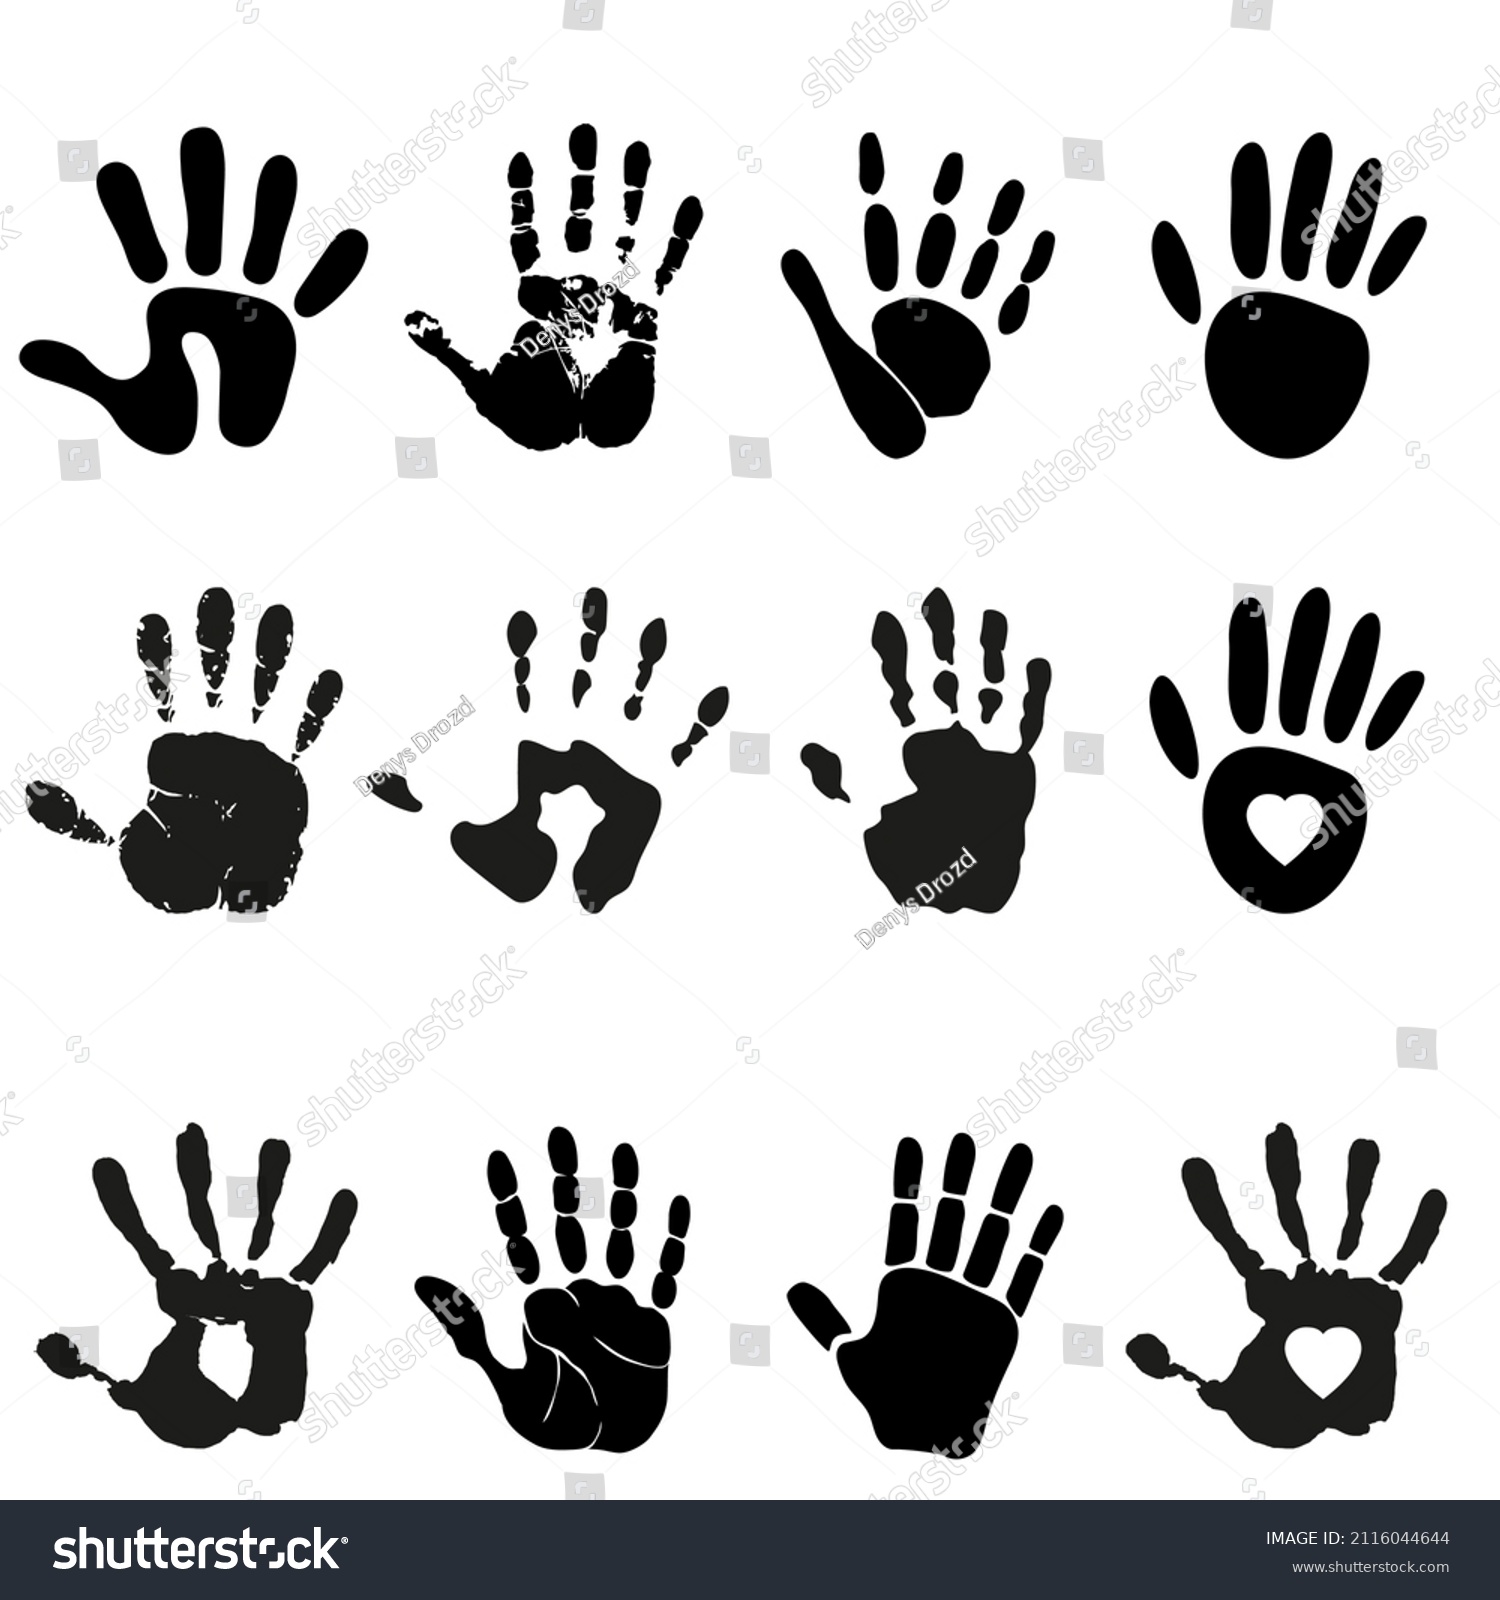 illustrator handprint symbol download